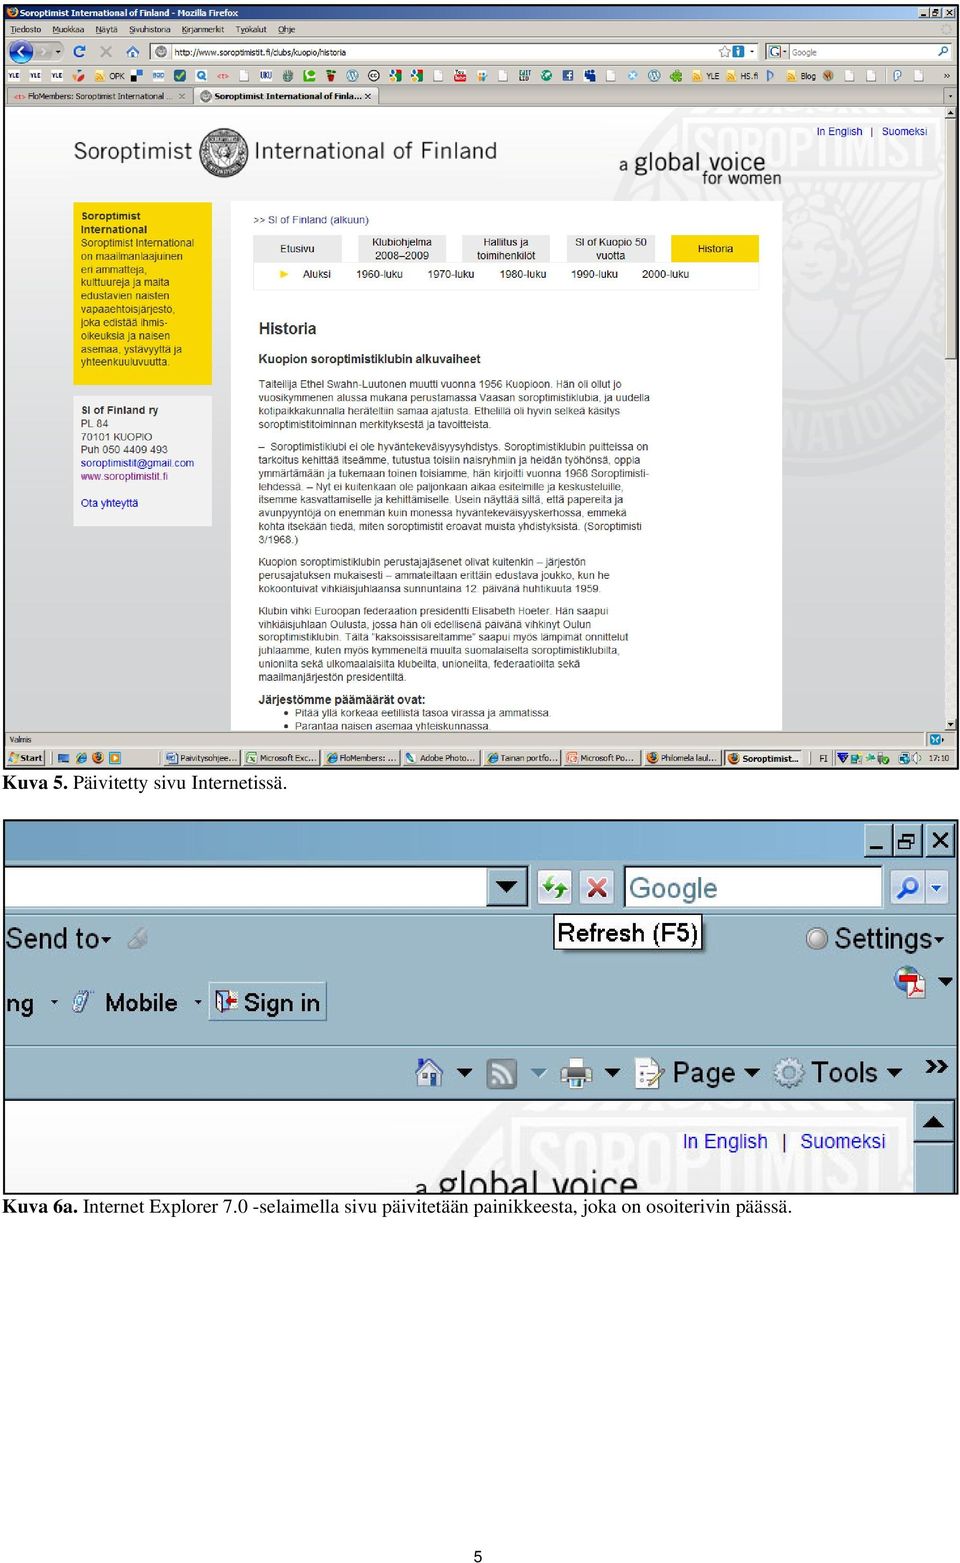 Kuva 6a. Internet Explorer 7.